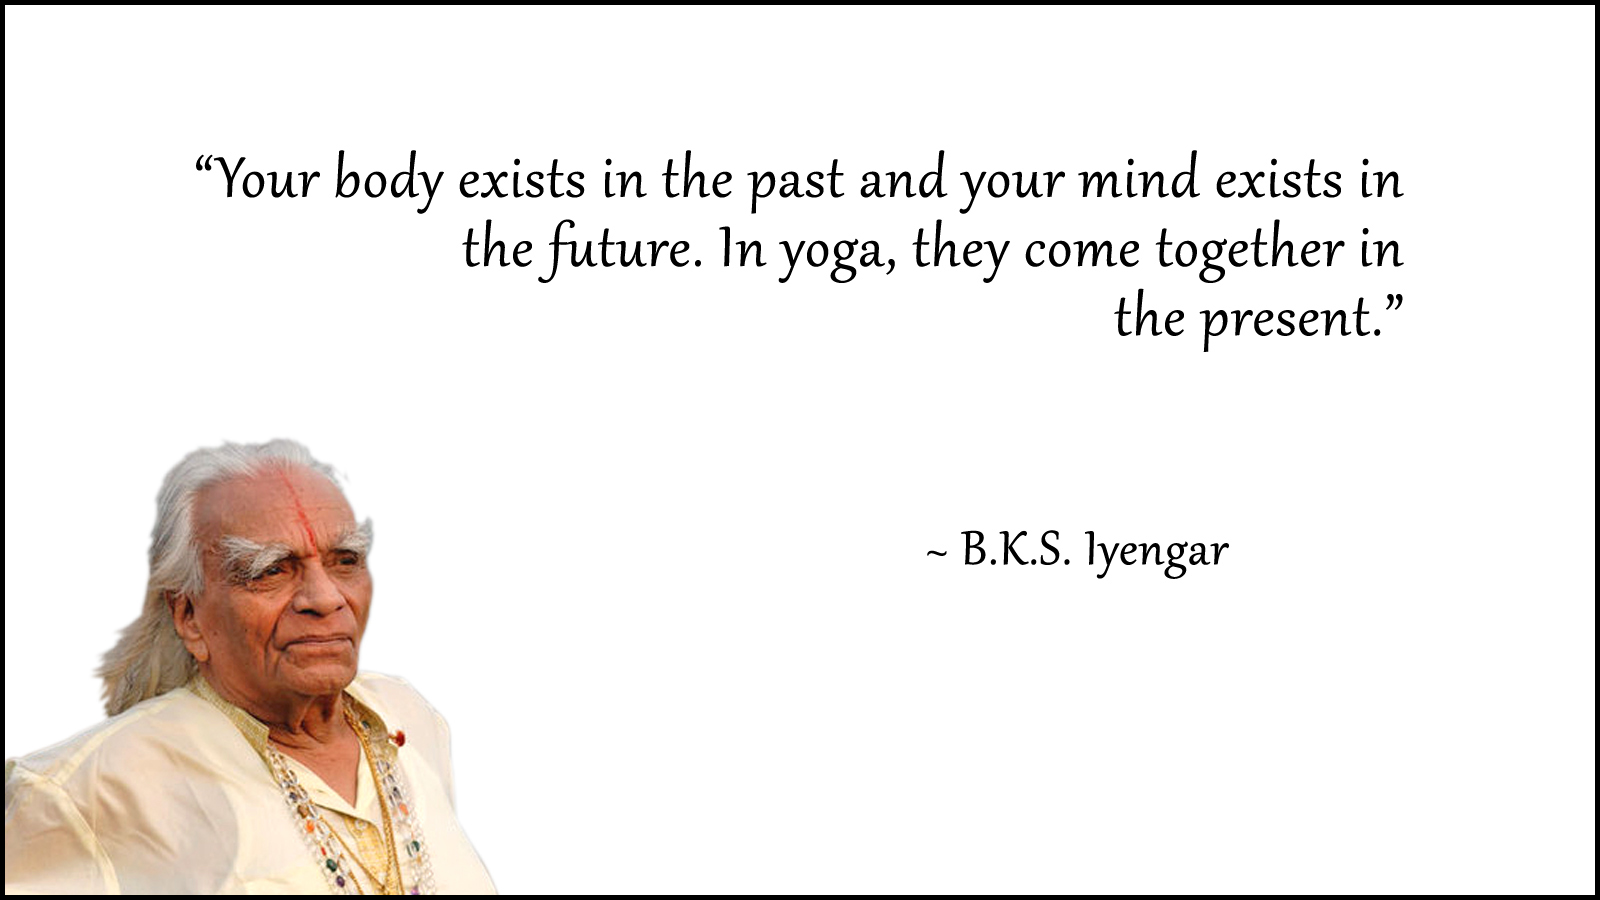 bks-iyengar-quote-yoga-past-future-present1